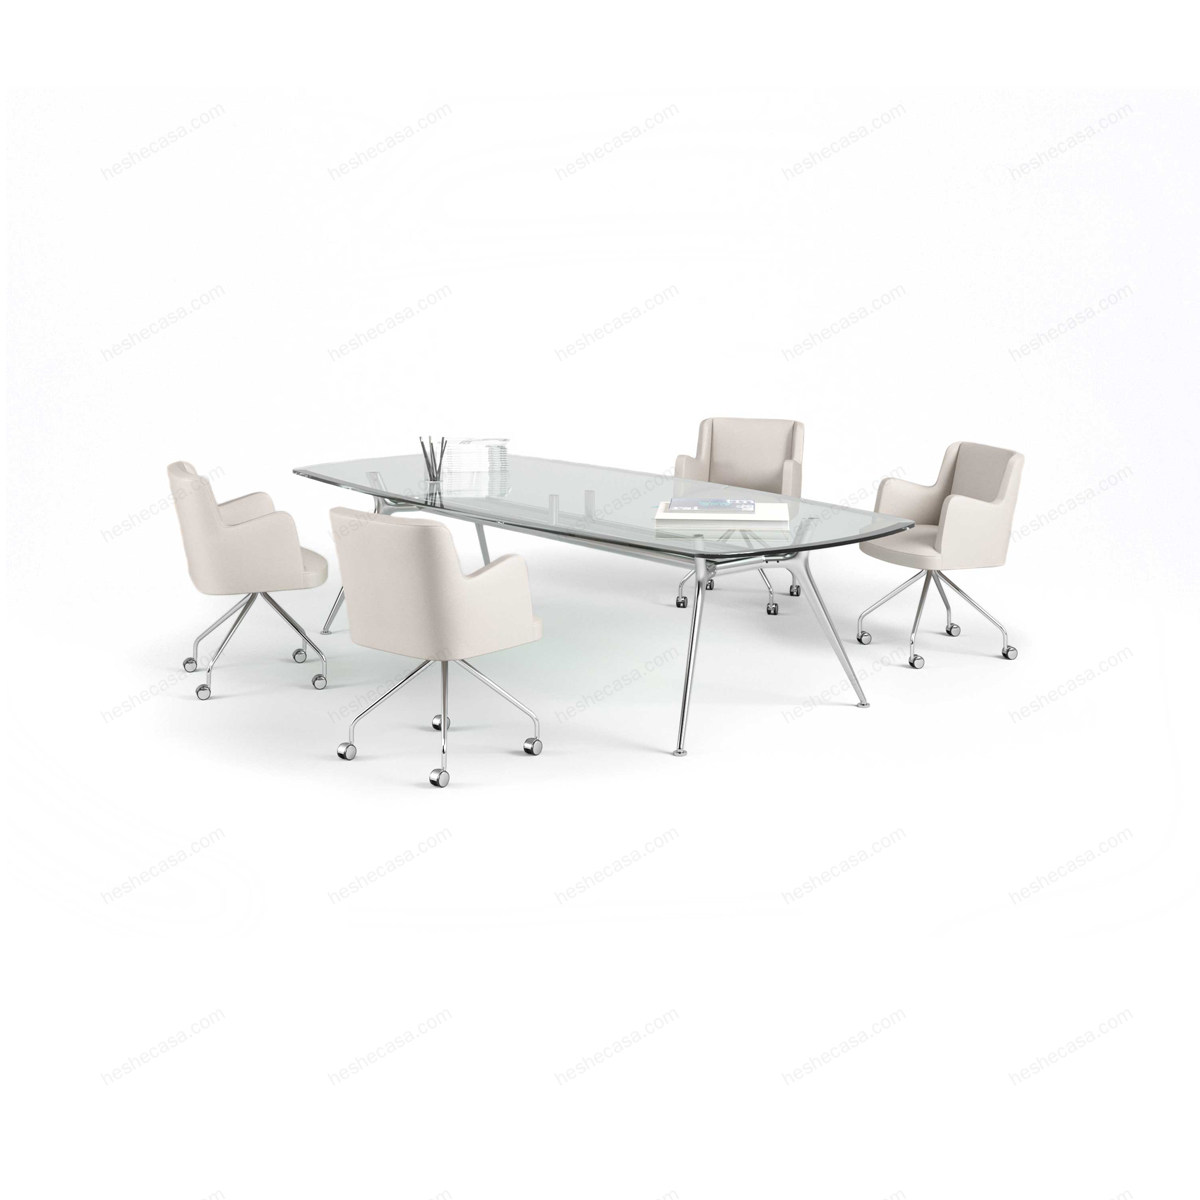 P016 - Tables会议桌